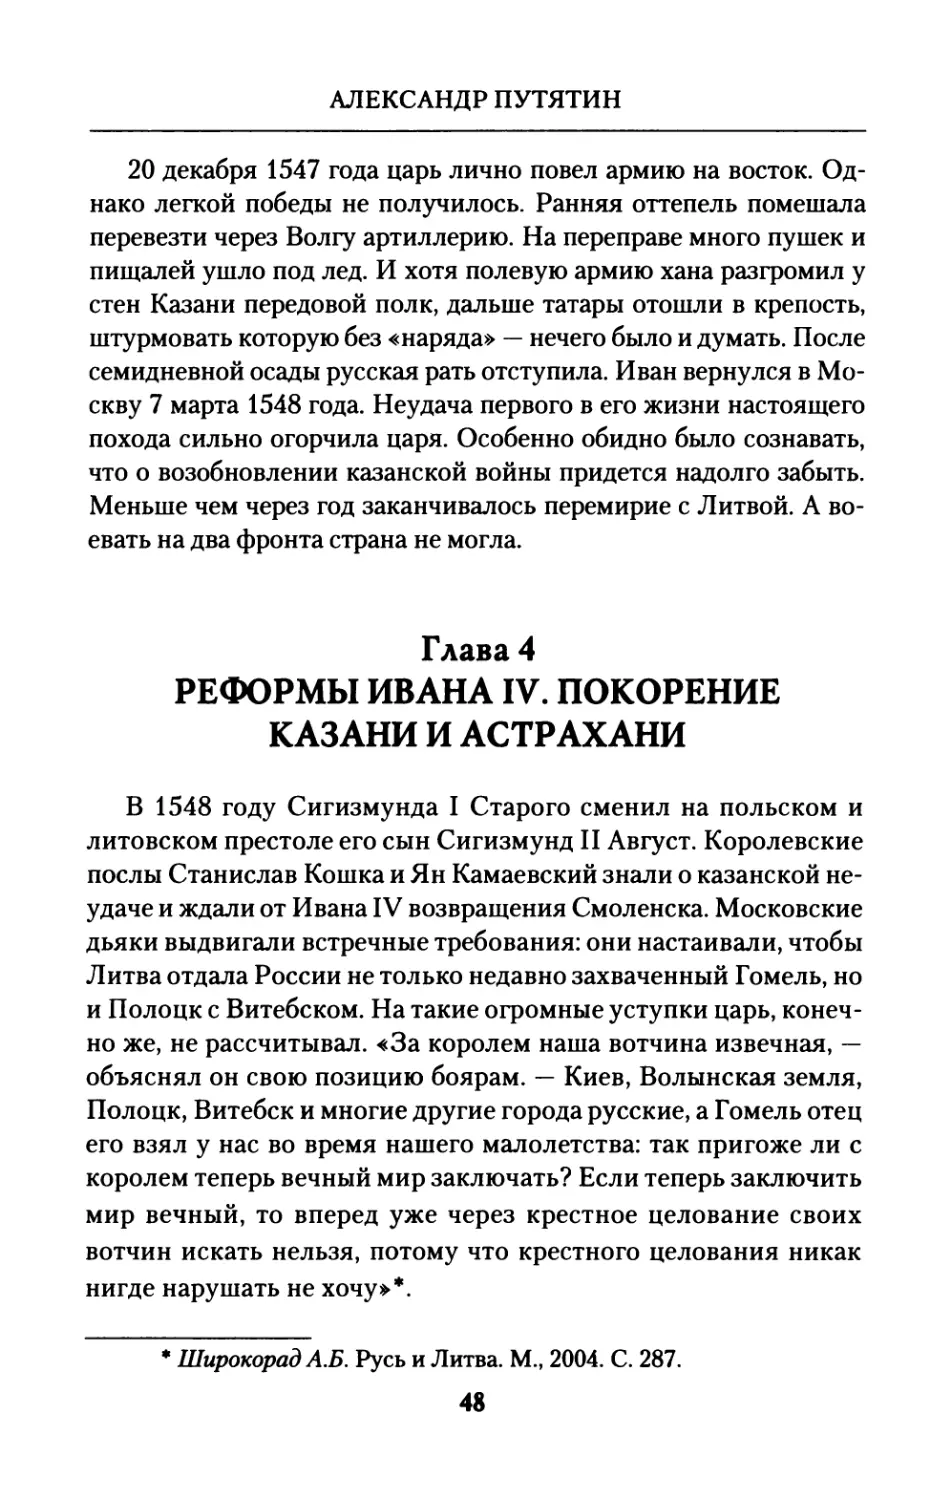 Глава  4.  Реформы  Ивана  IV.  Покорение  Казани  и  Астрахани